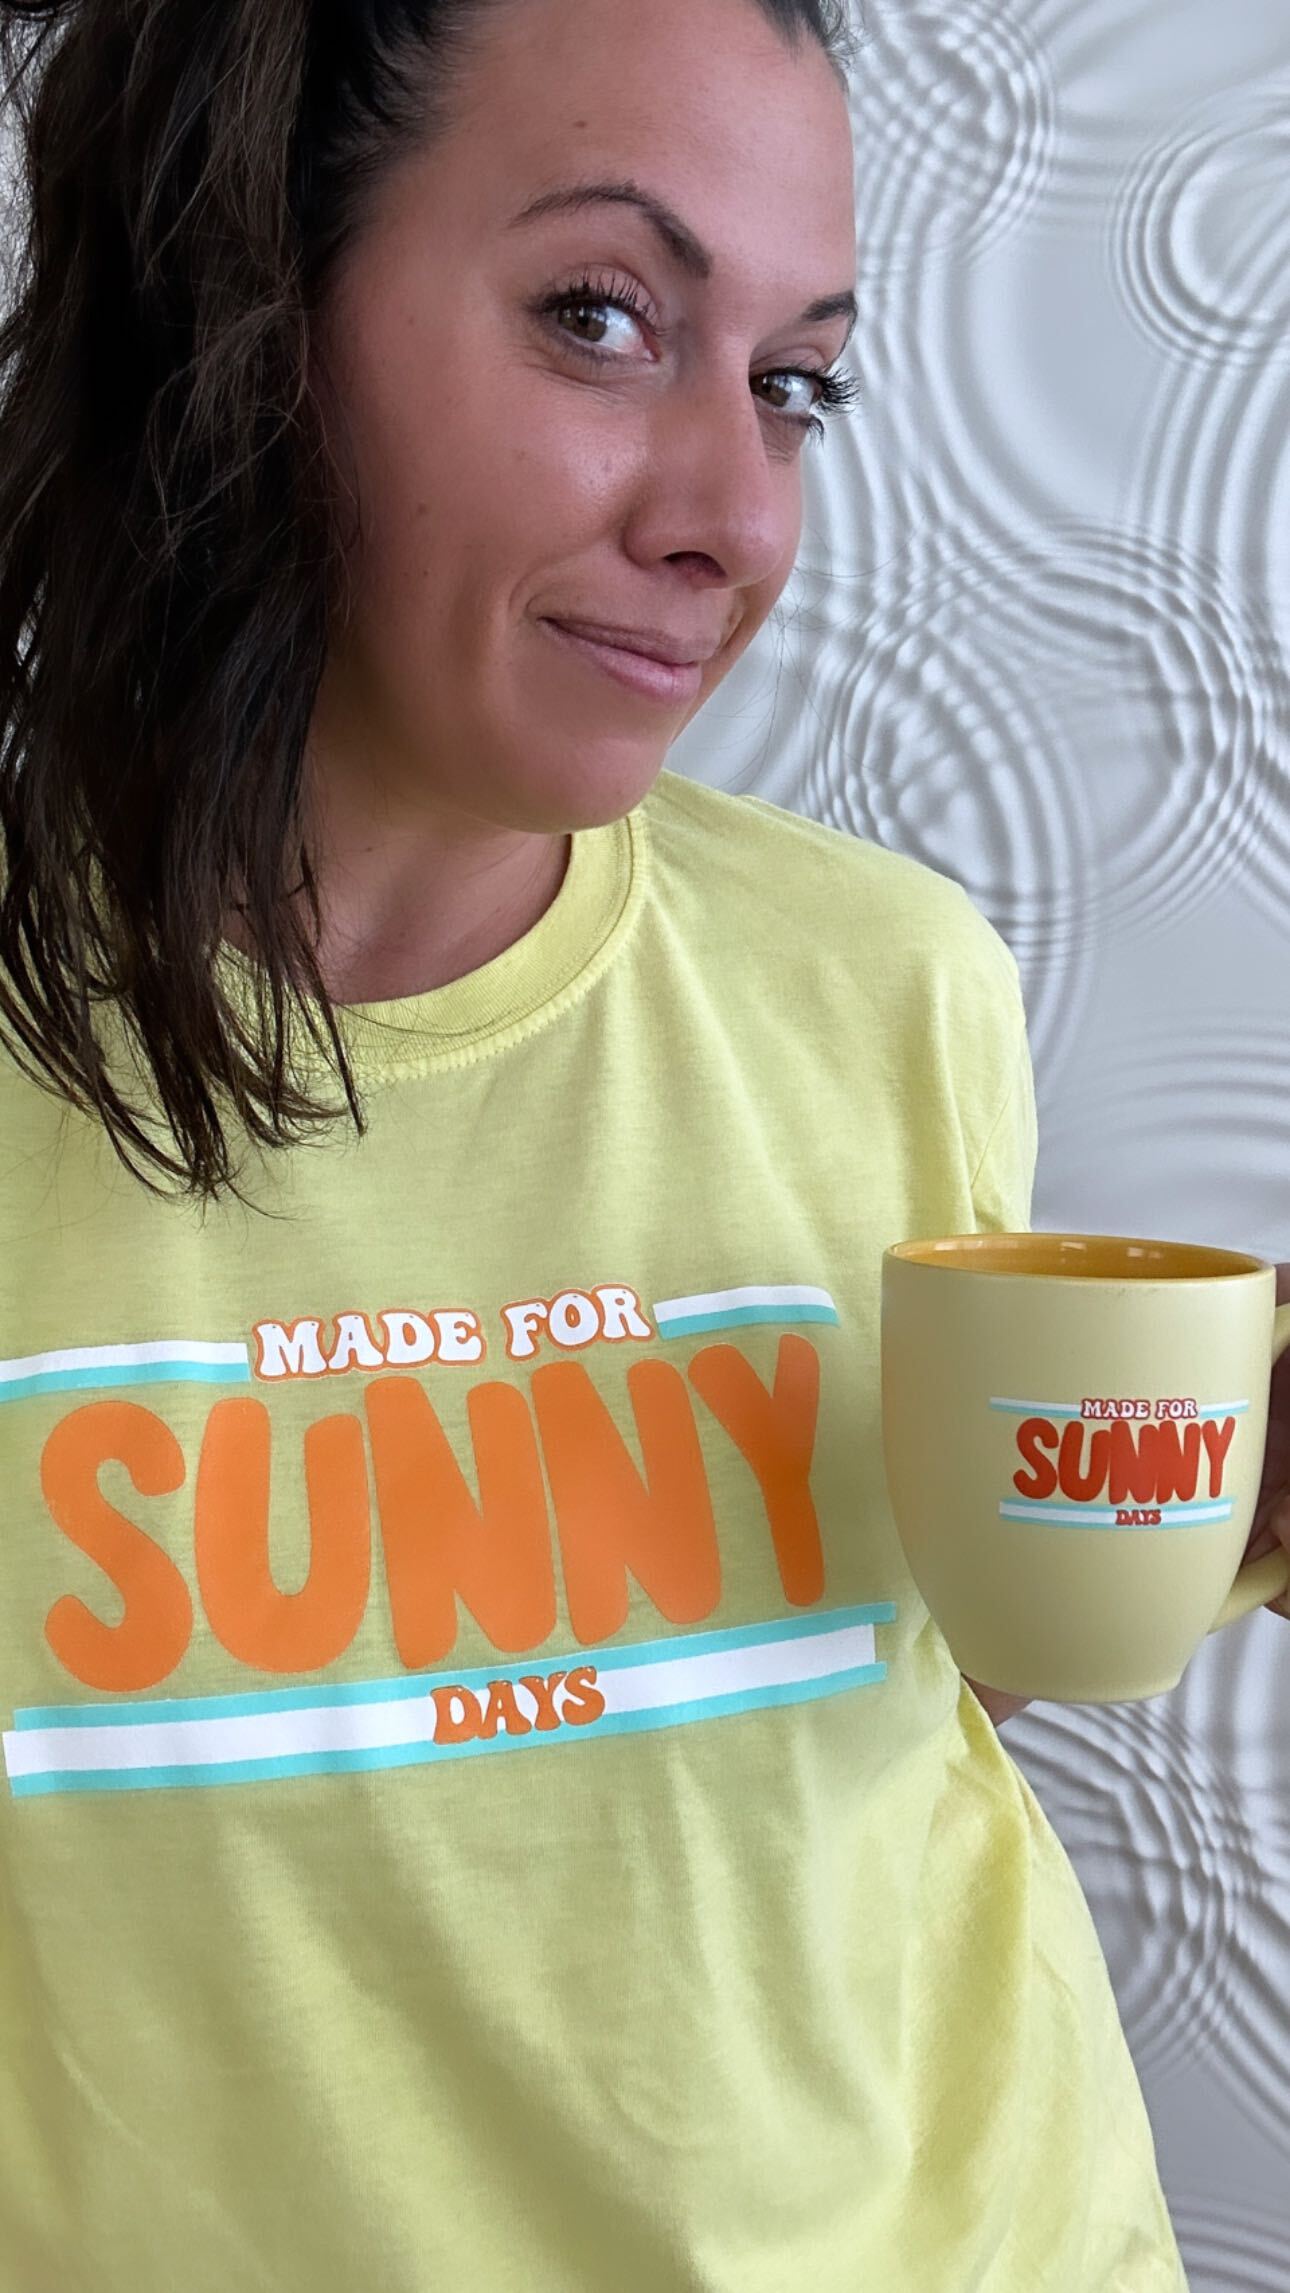 Made For Sunny Days - Short Sleeve Shirt